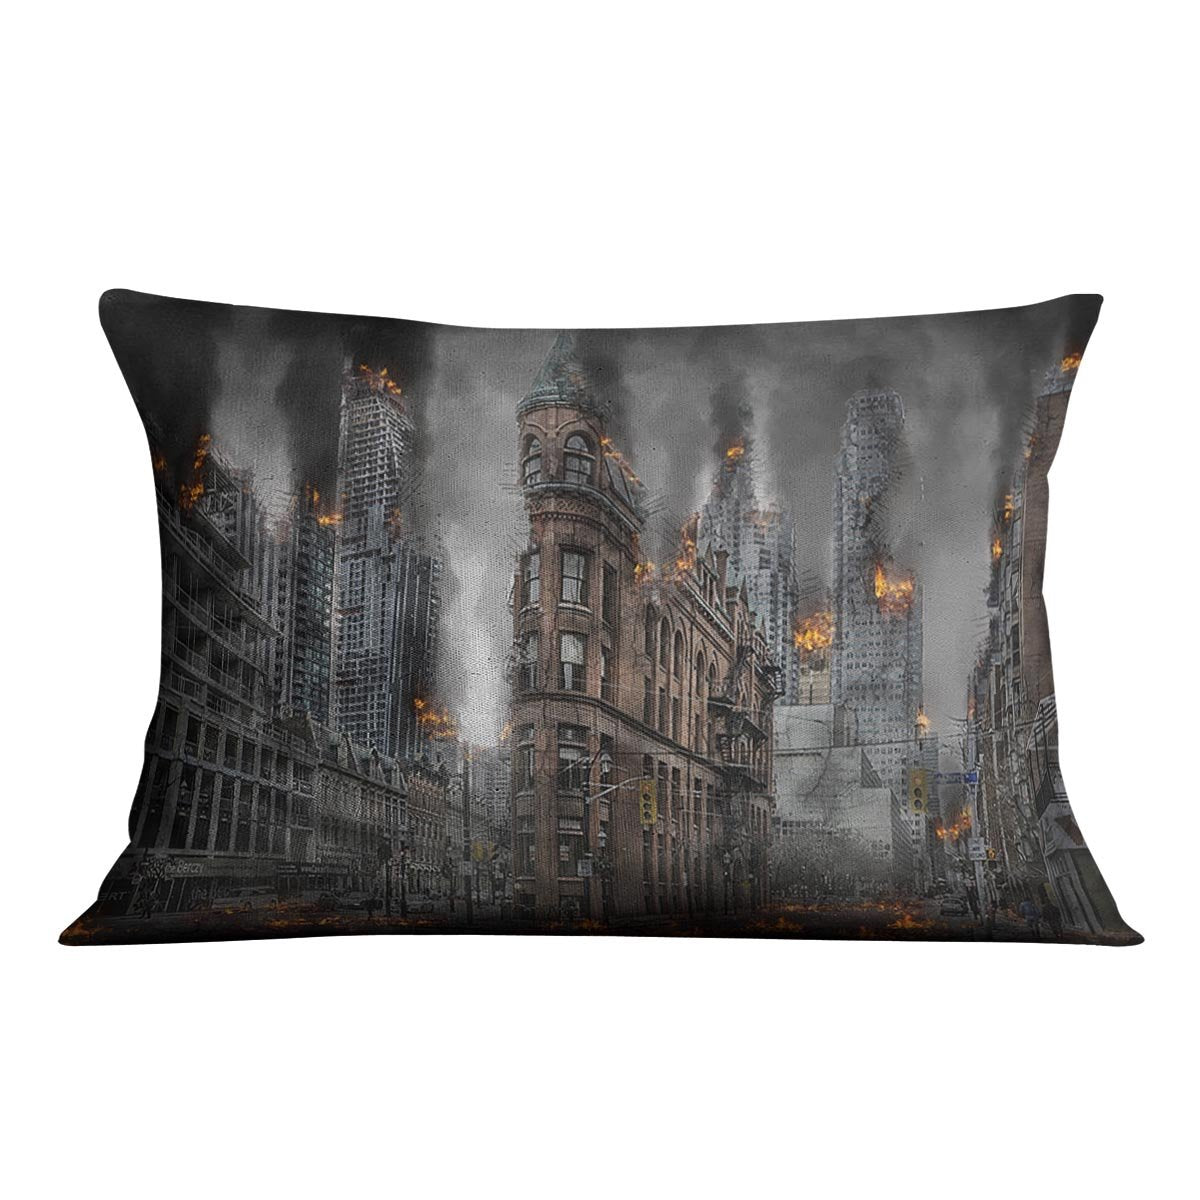 Apocalypse City Cushion